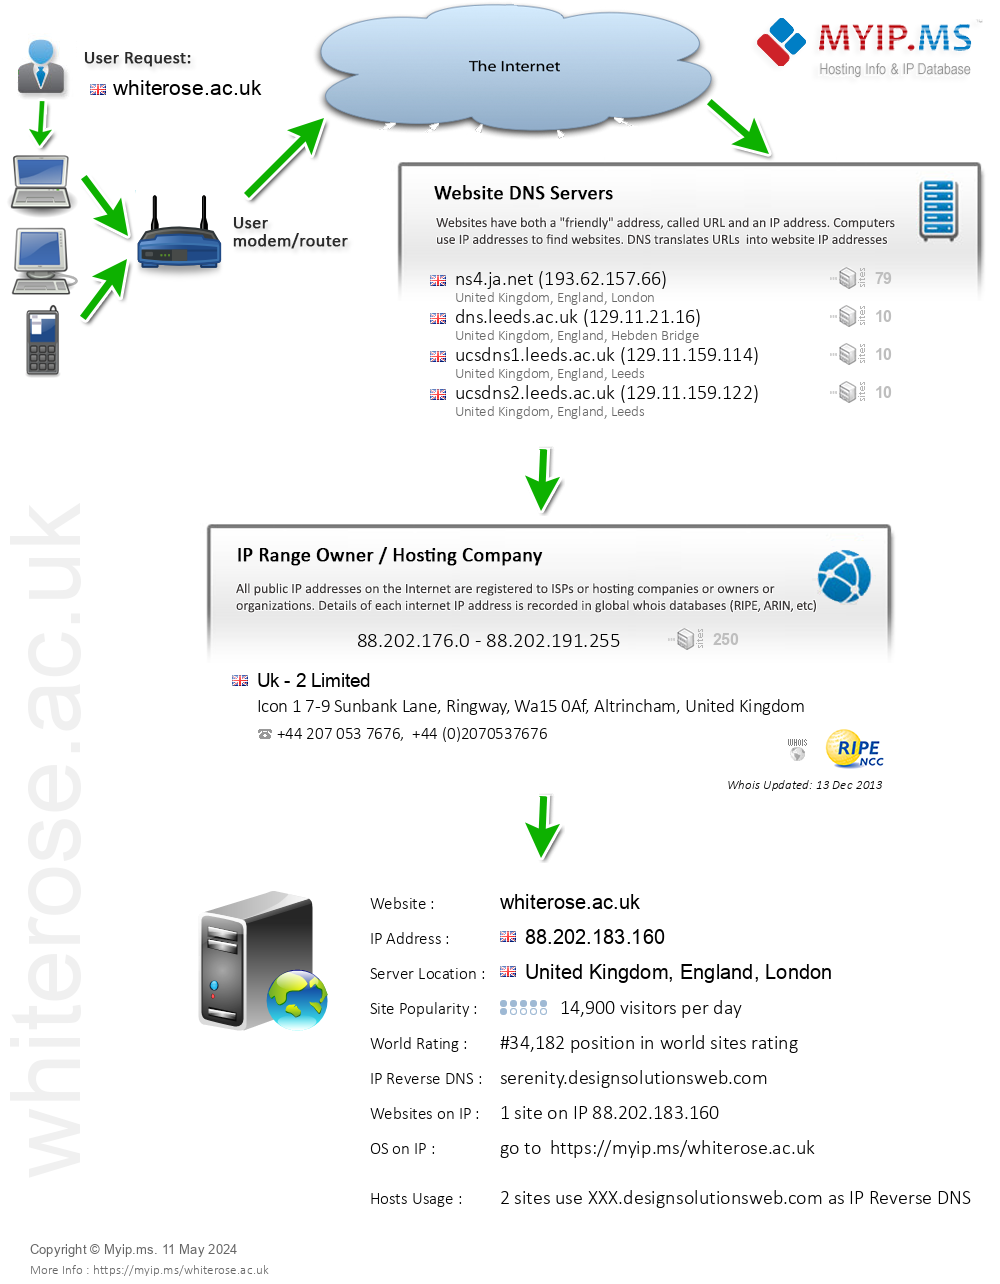 Whiterose.ac.uk - Website Hosting Visual IP Diagram